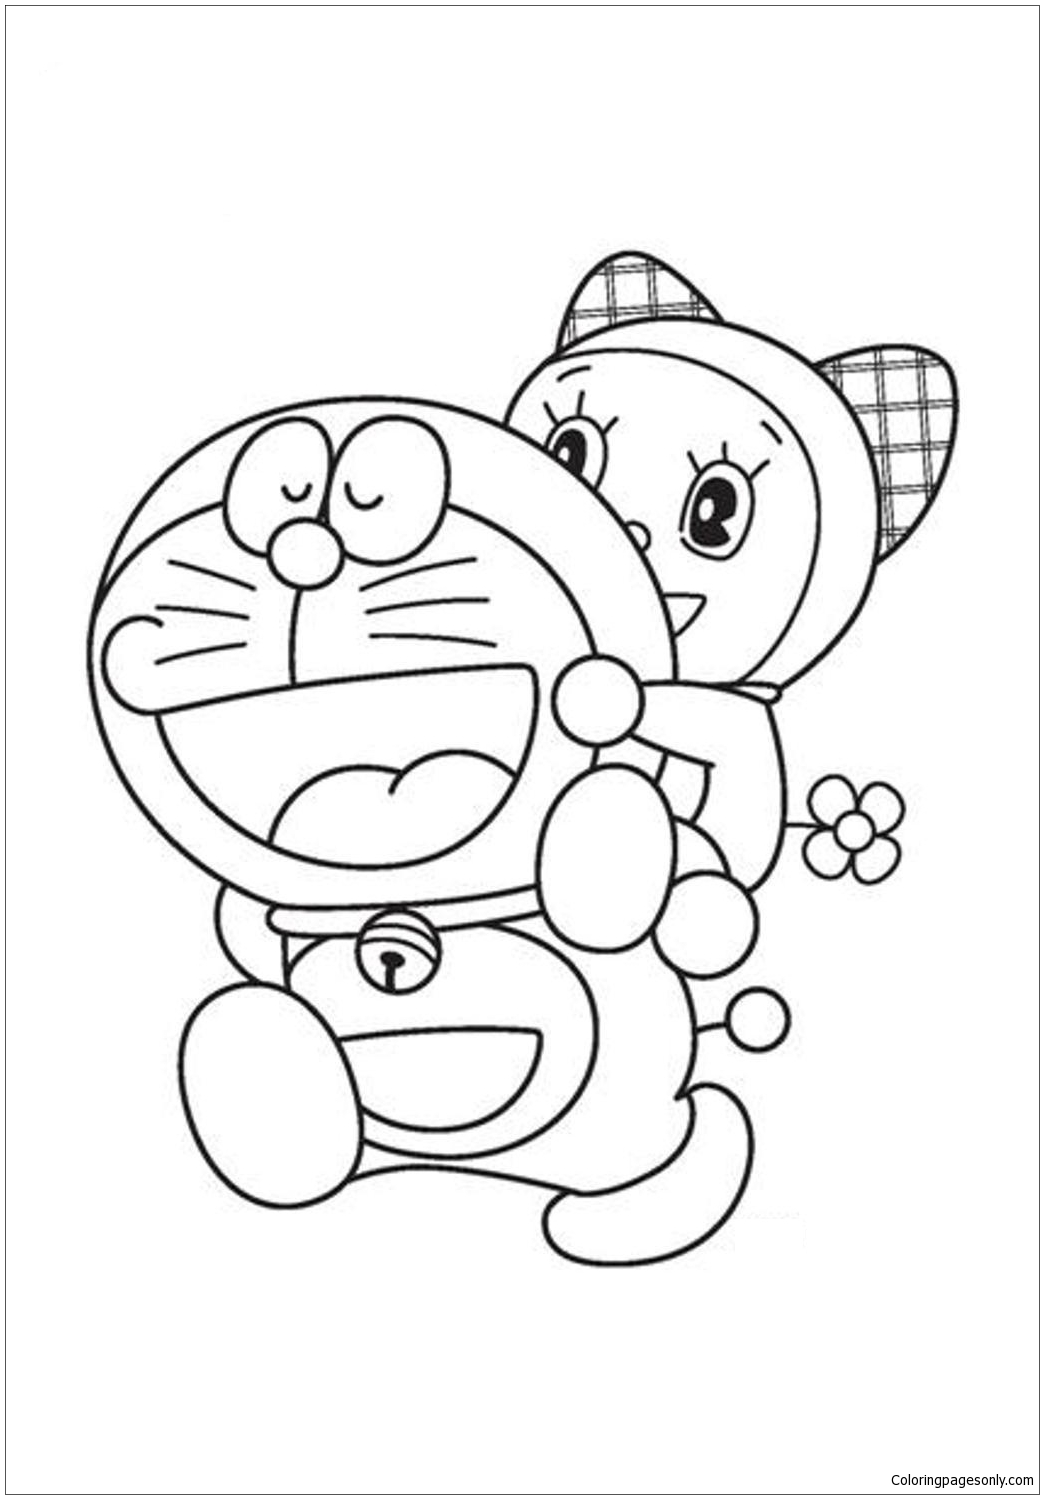 Doraemon and Dorami Coloring Pages   Doraemon Coloring Pages ...